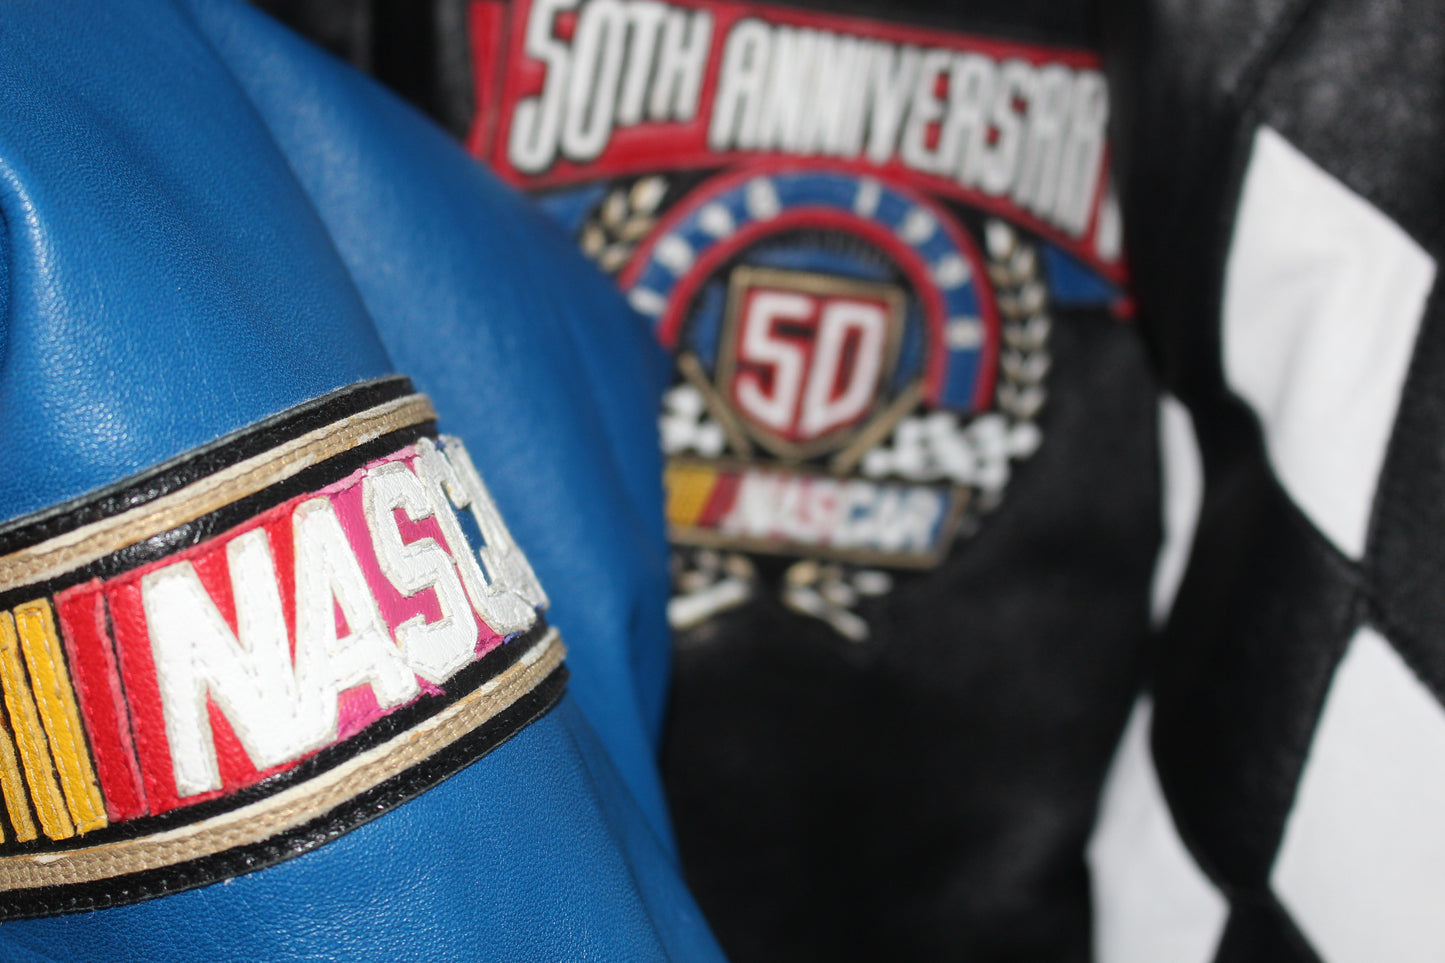 50th Anniversary NASCAR 1998 Jeff Hamilton Leather Jacket (L)